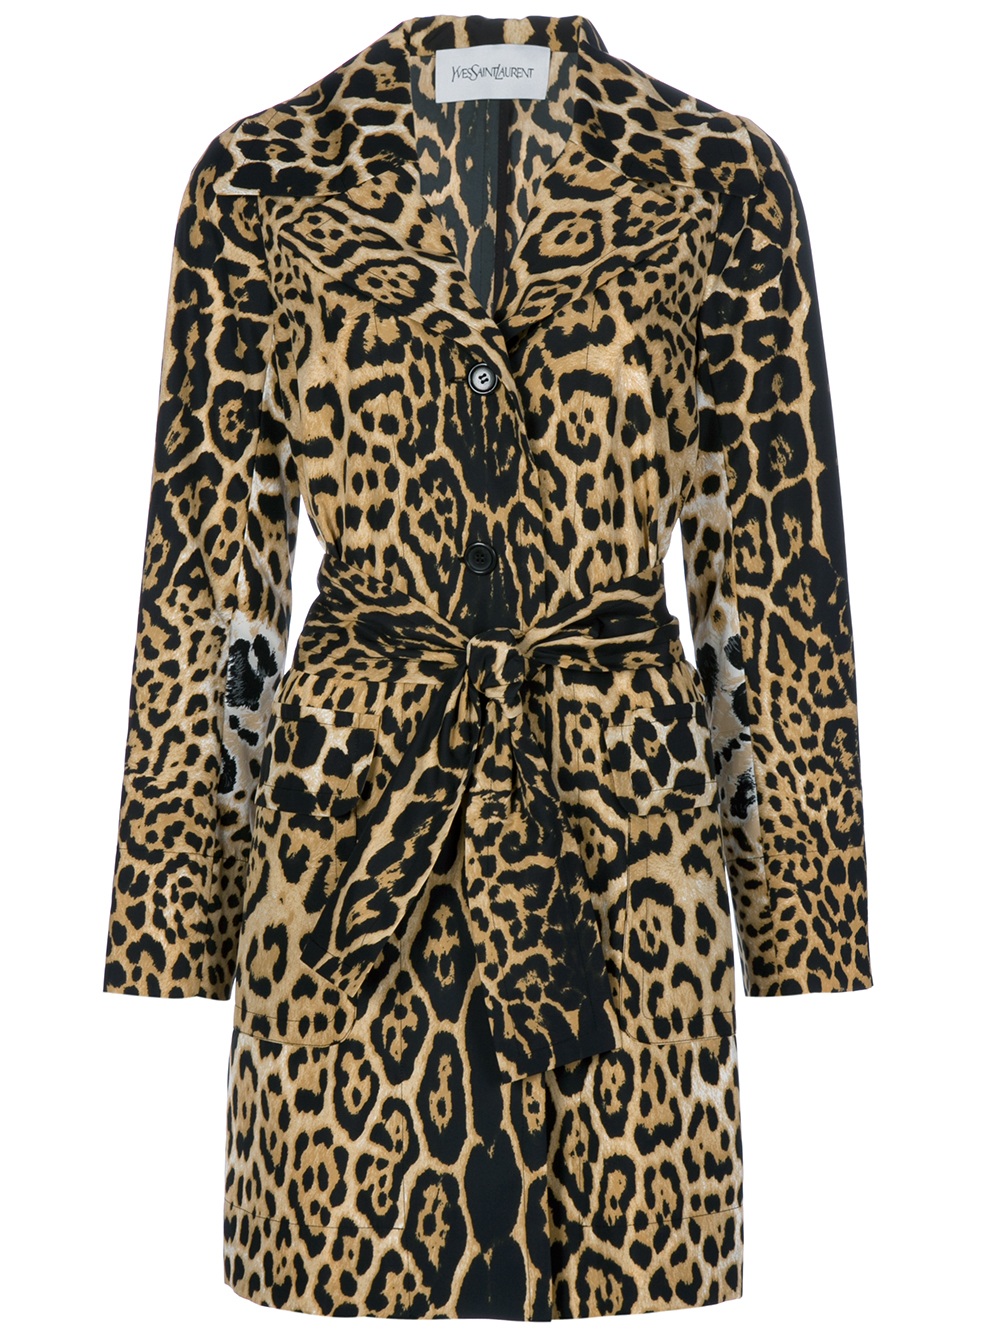 Saint Laurent Leopard Print Coat in Animal (leopard) | Lyst